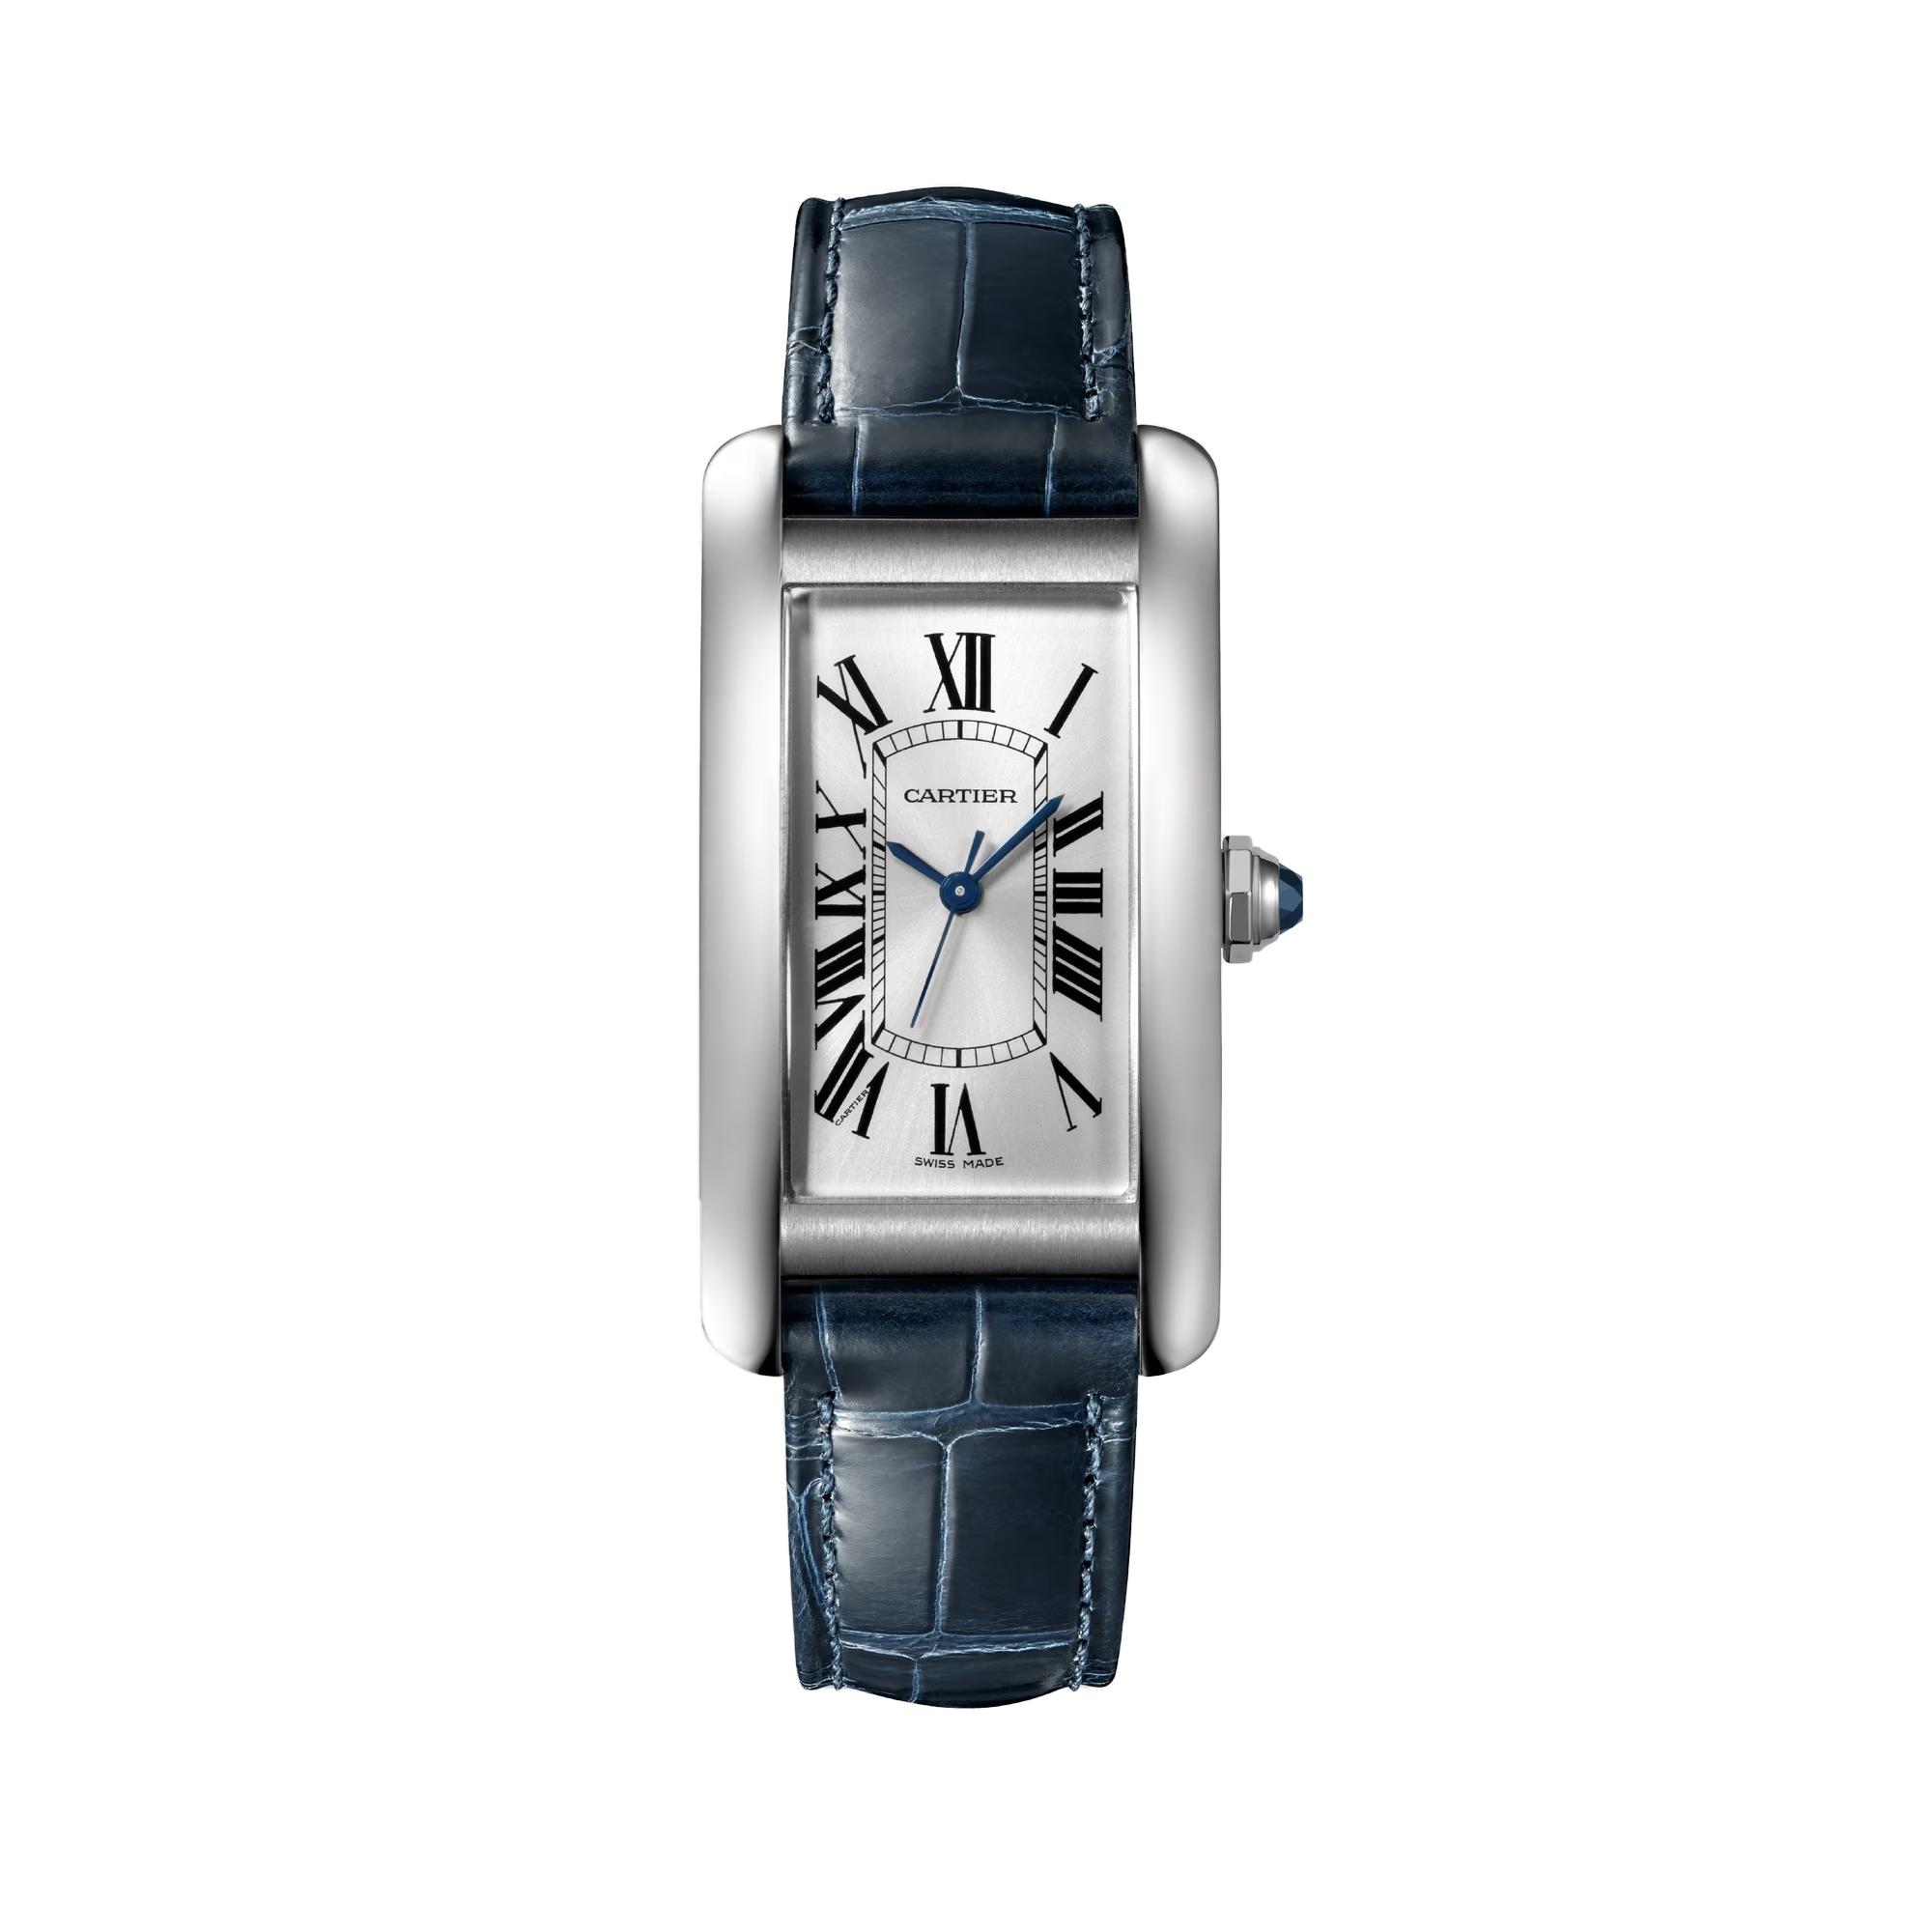 Cartier Tank Americaine Watch, size medium